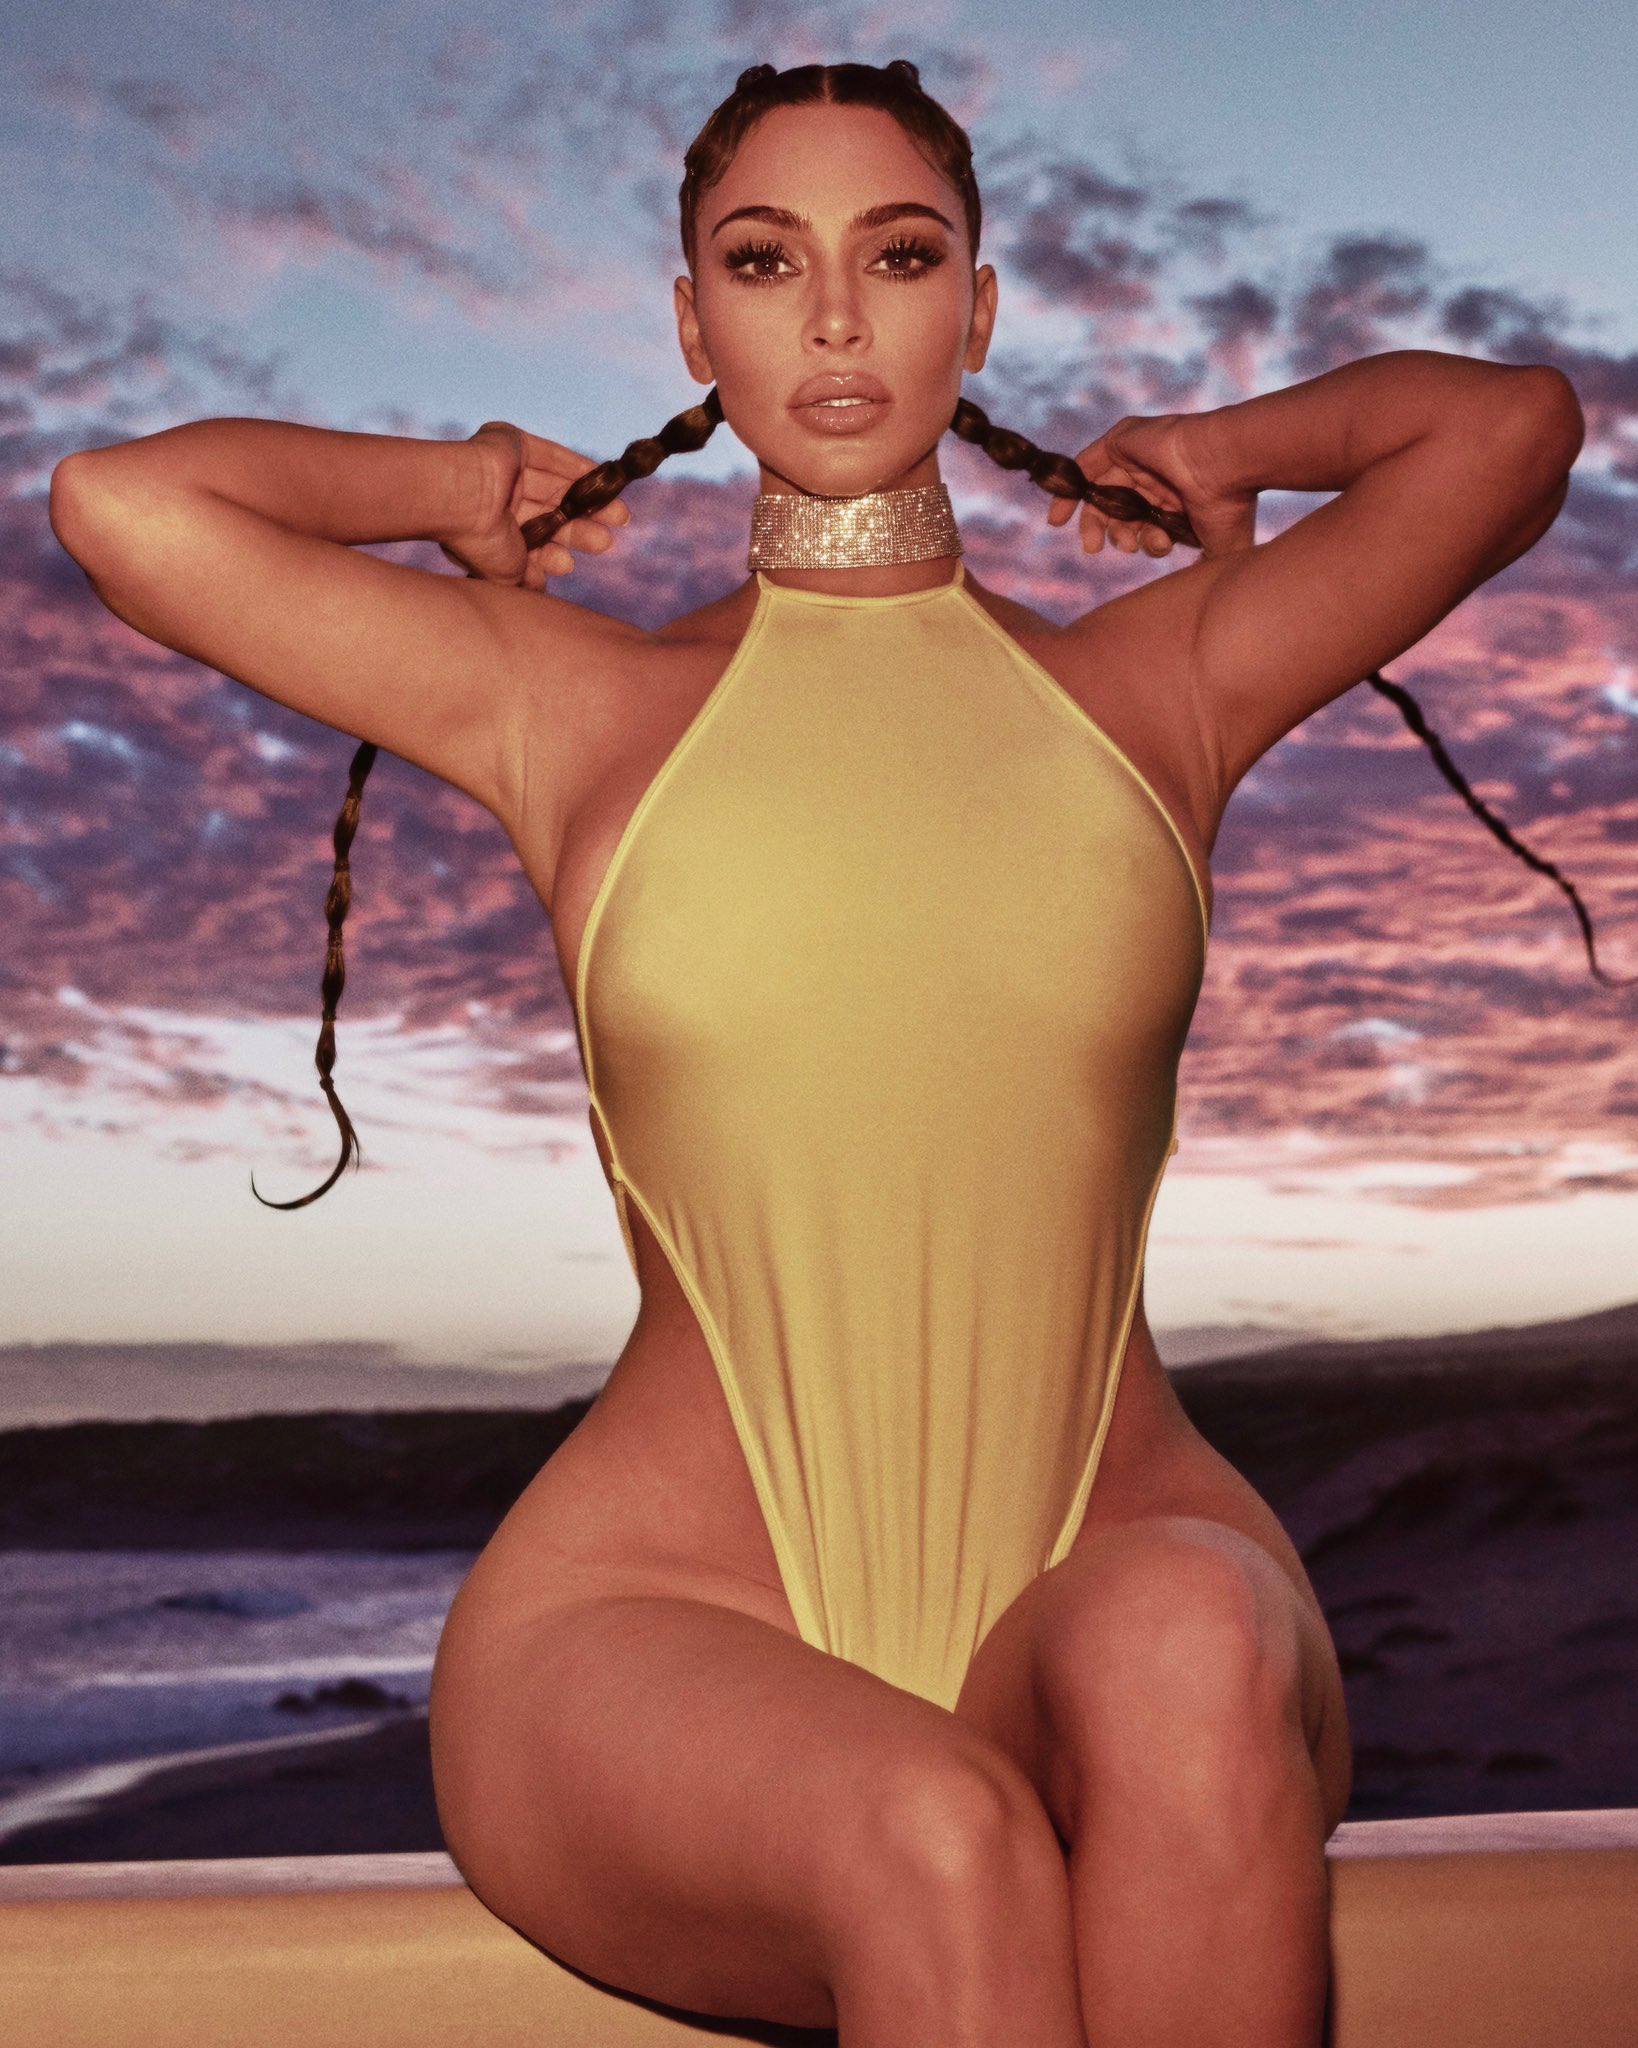 Kim Kardashian – Hot Body In Revealing Swimsuit Photoshoot 0001